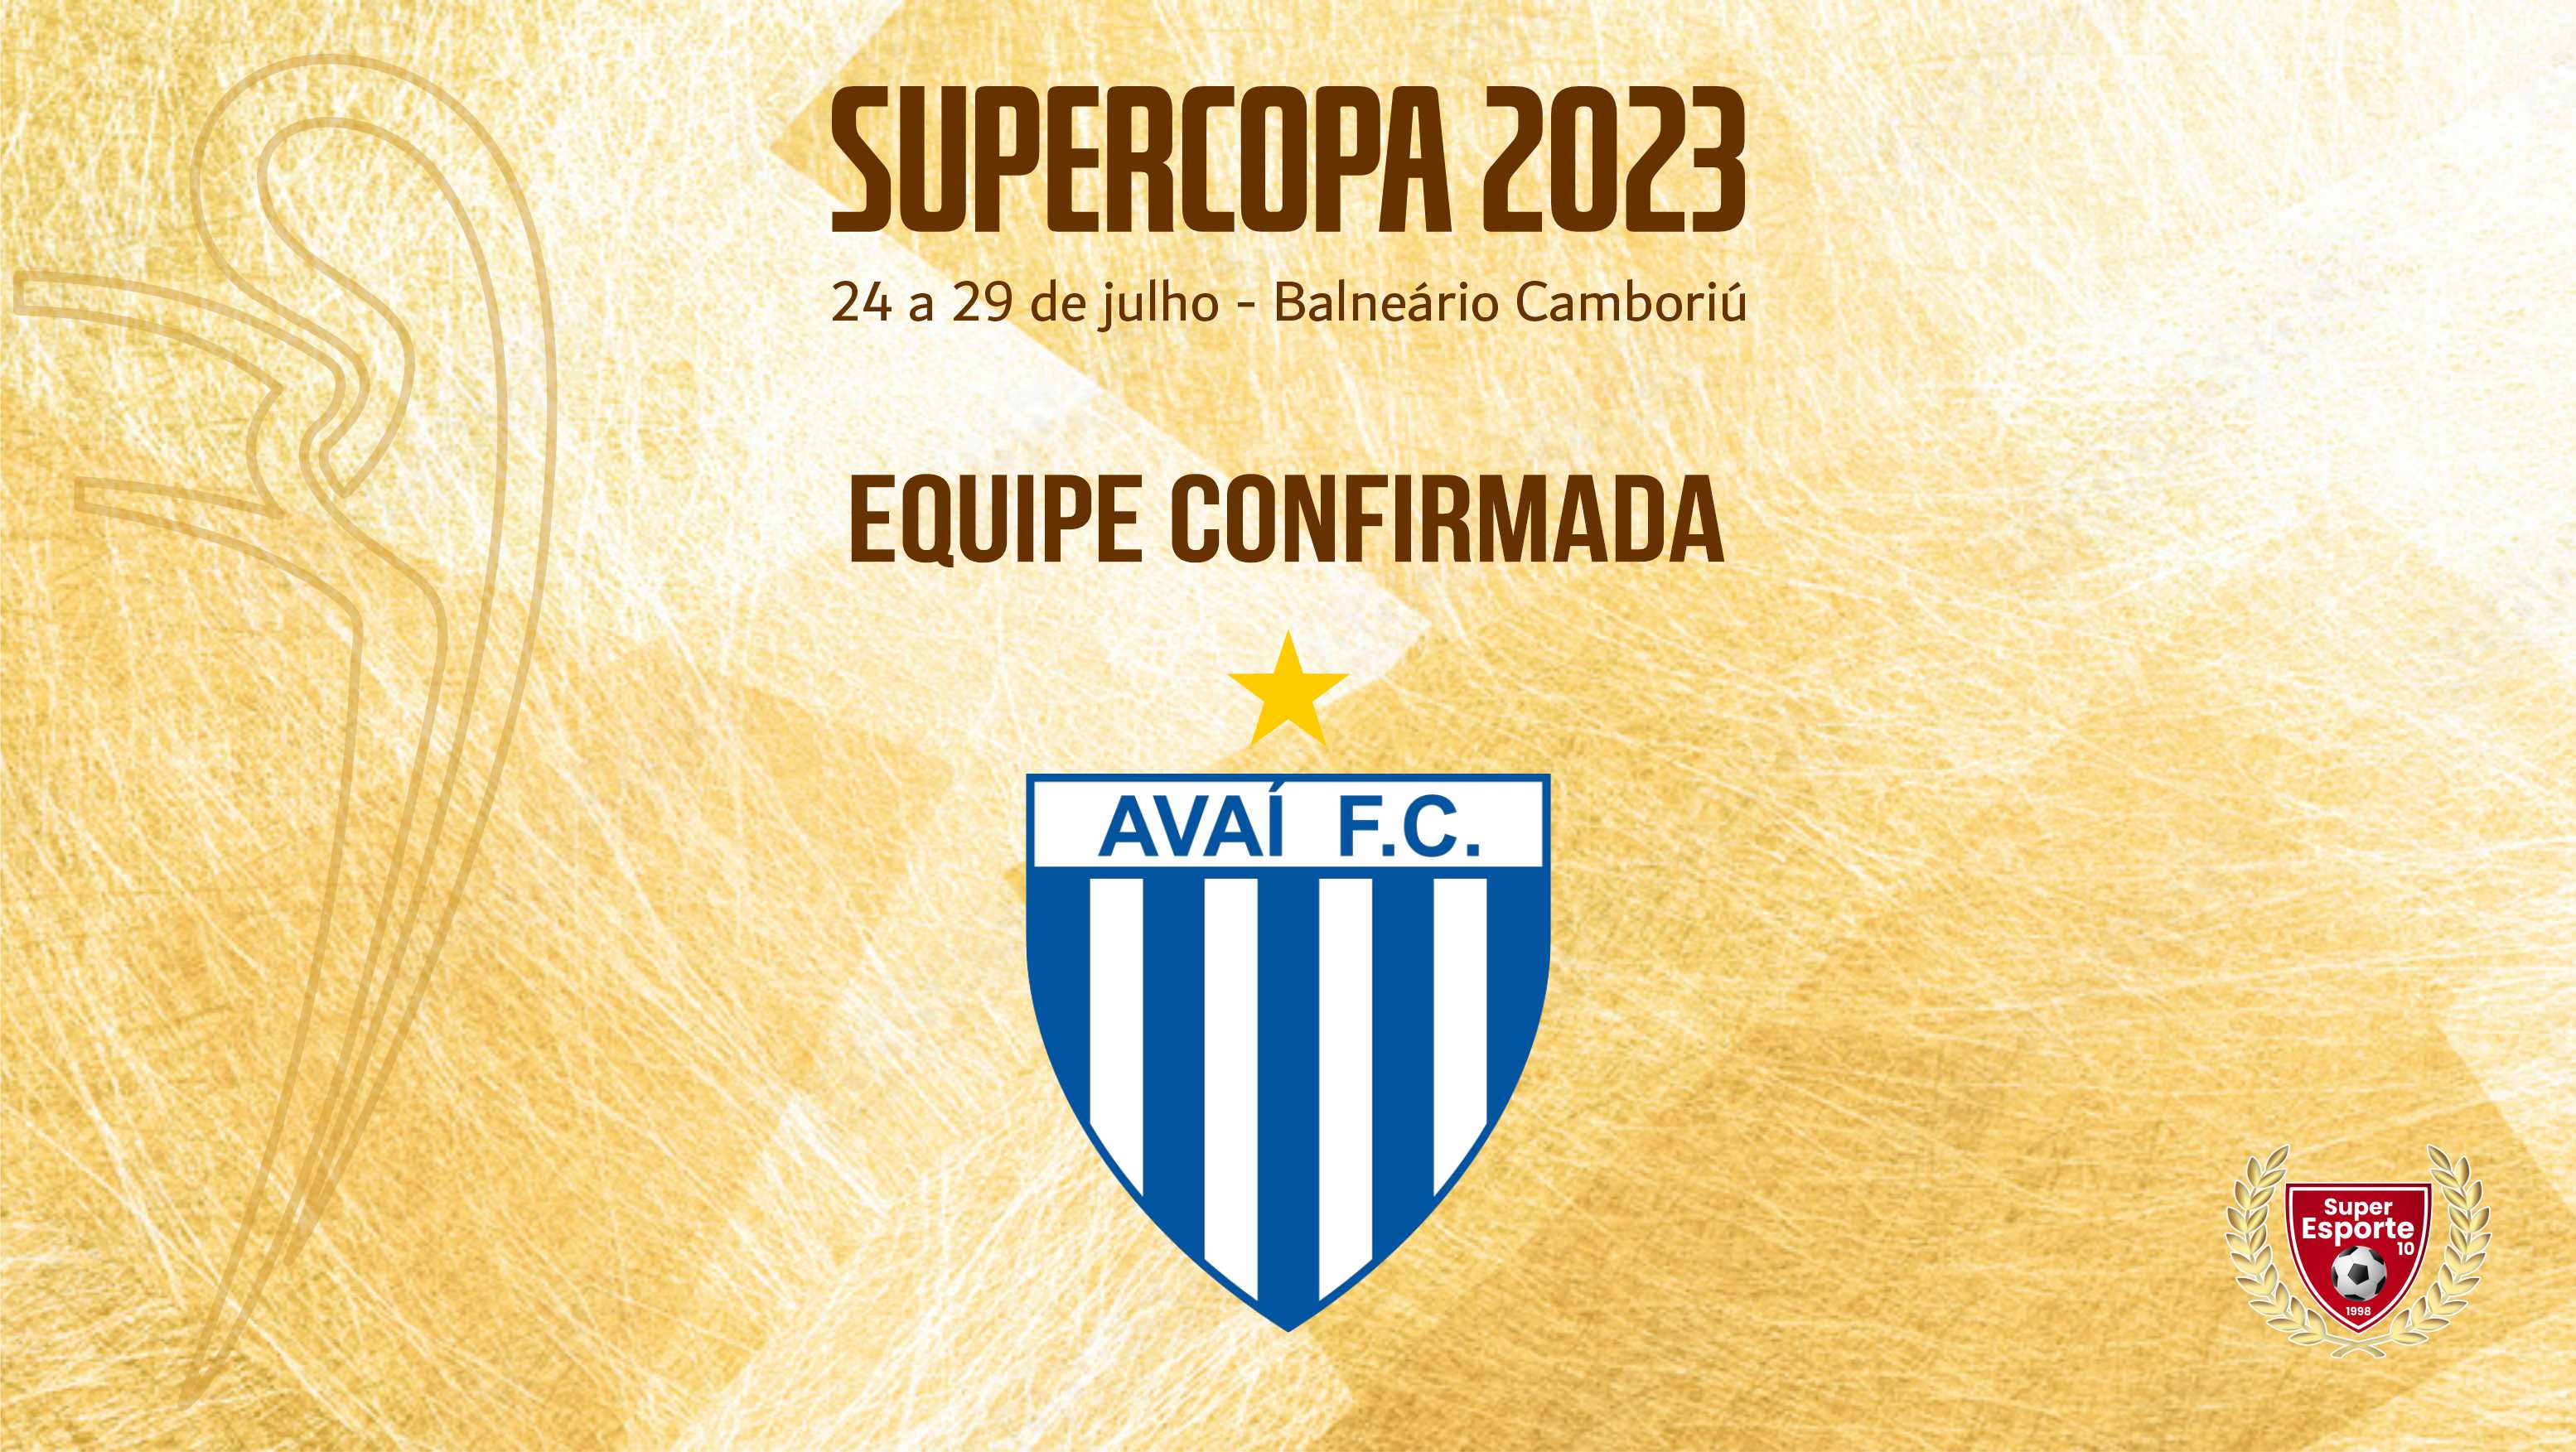 Supercopa terá a participação do Avaí Futebol Clube